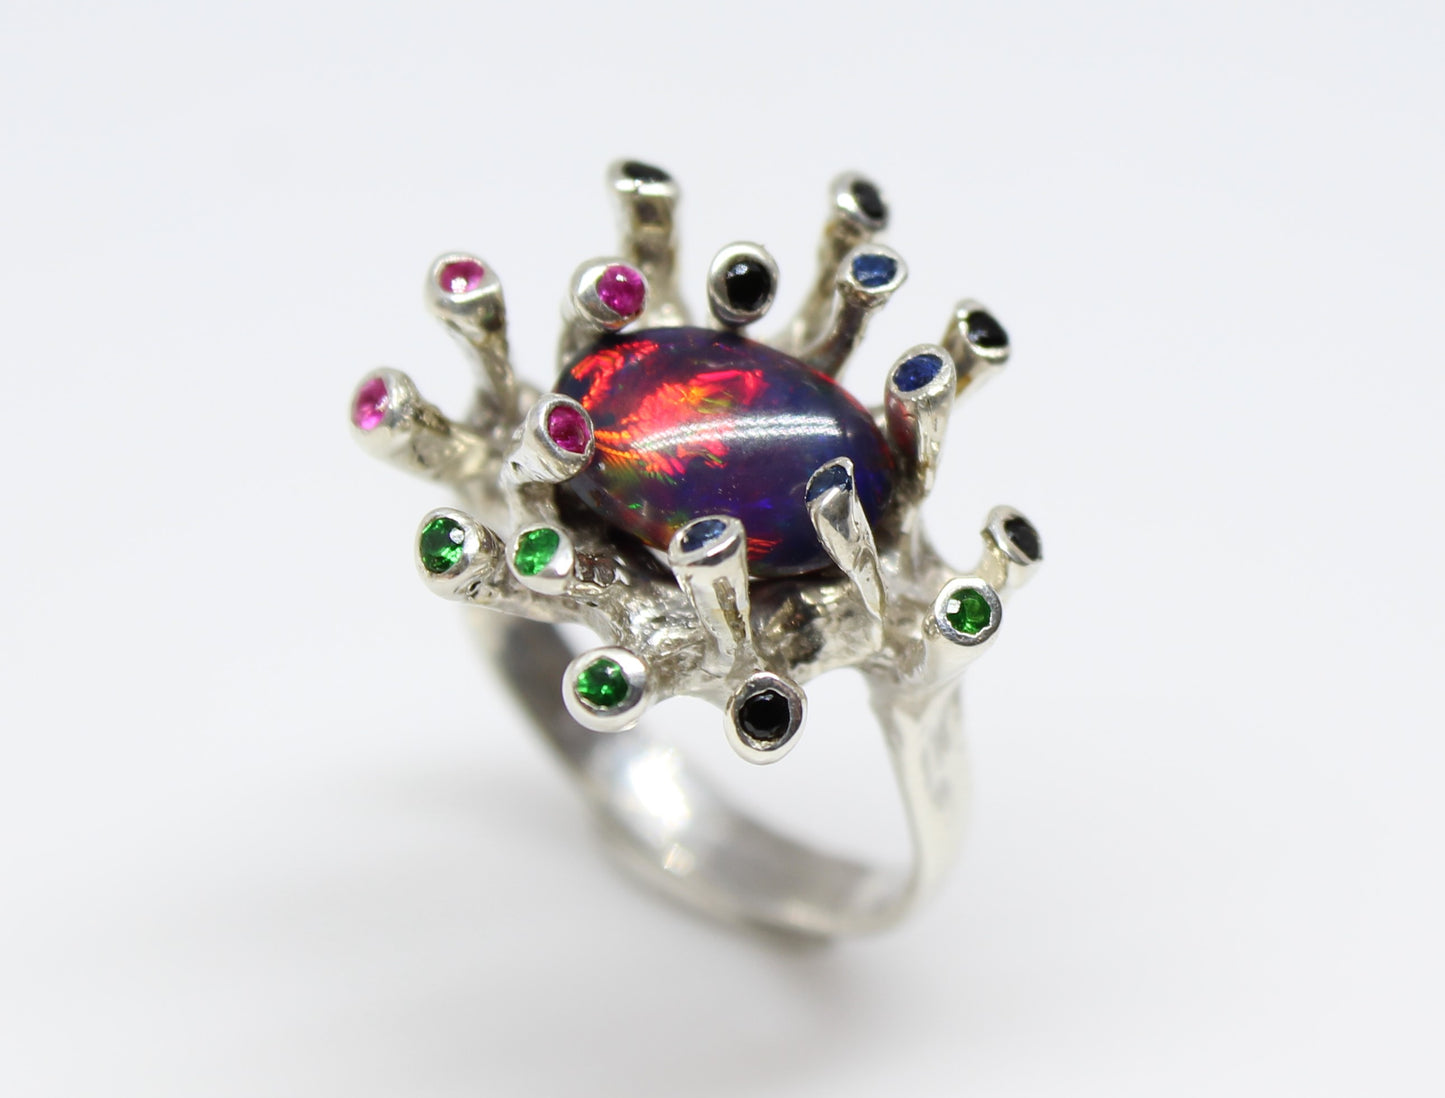 Black Opal & Gemstones Sterling Silver Ring - Handmade Jewelry #218